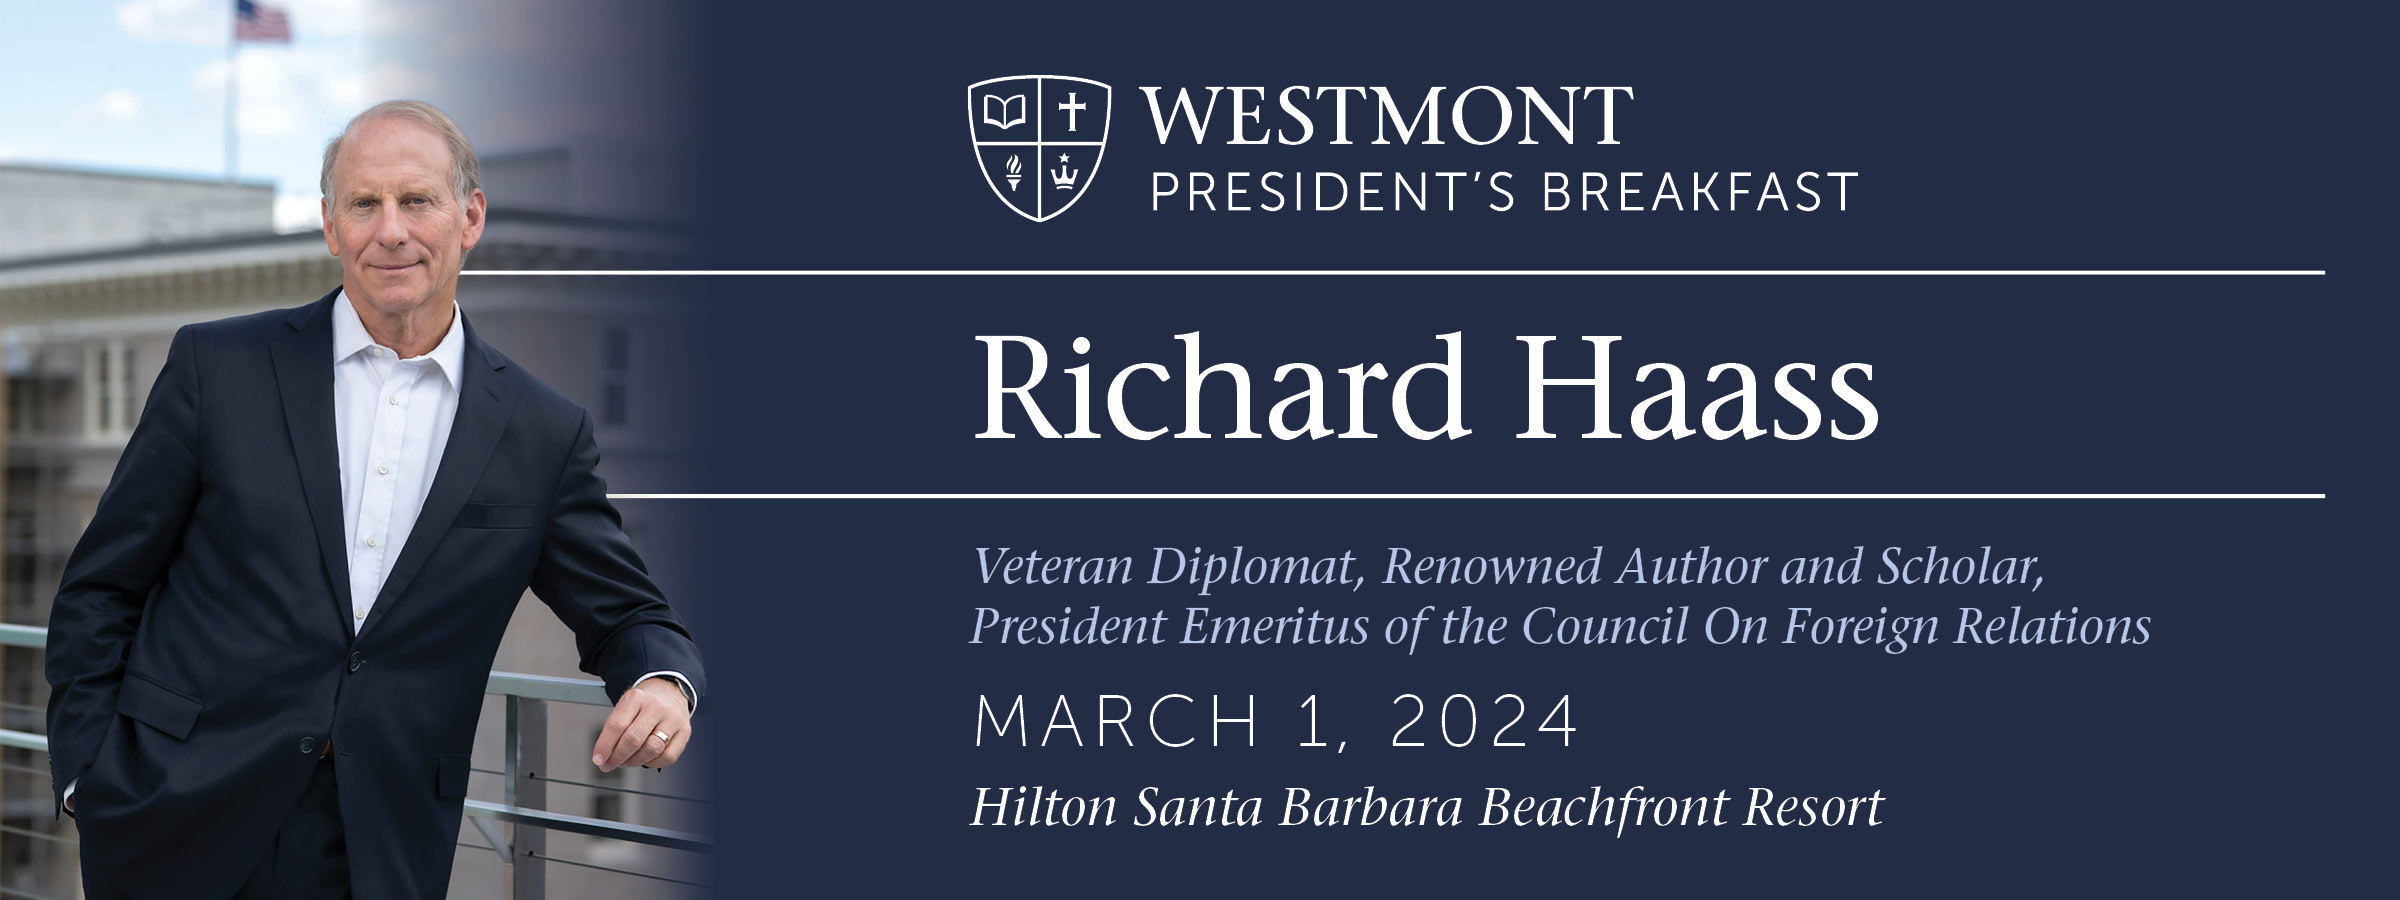 President's Breakfast 2024 Richard Haass